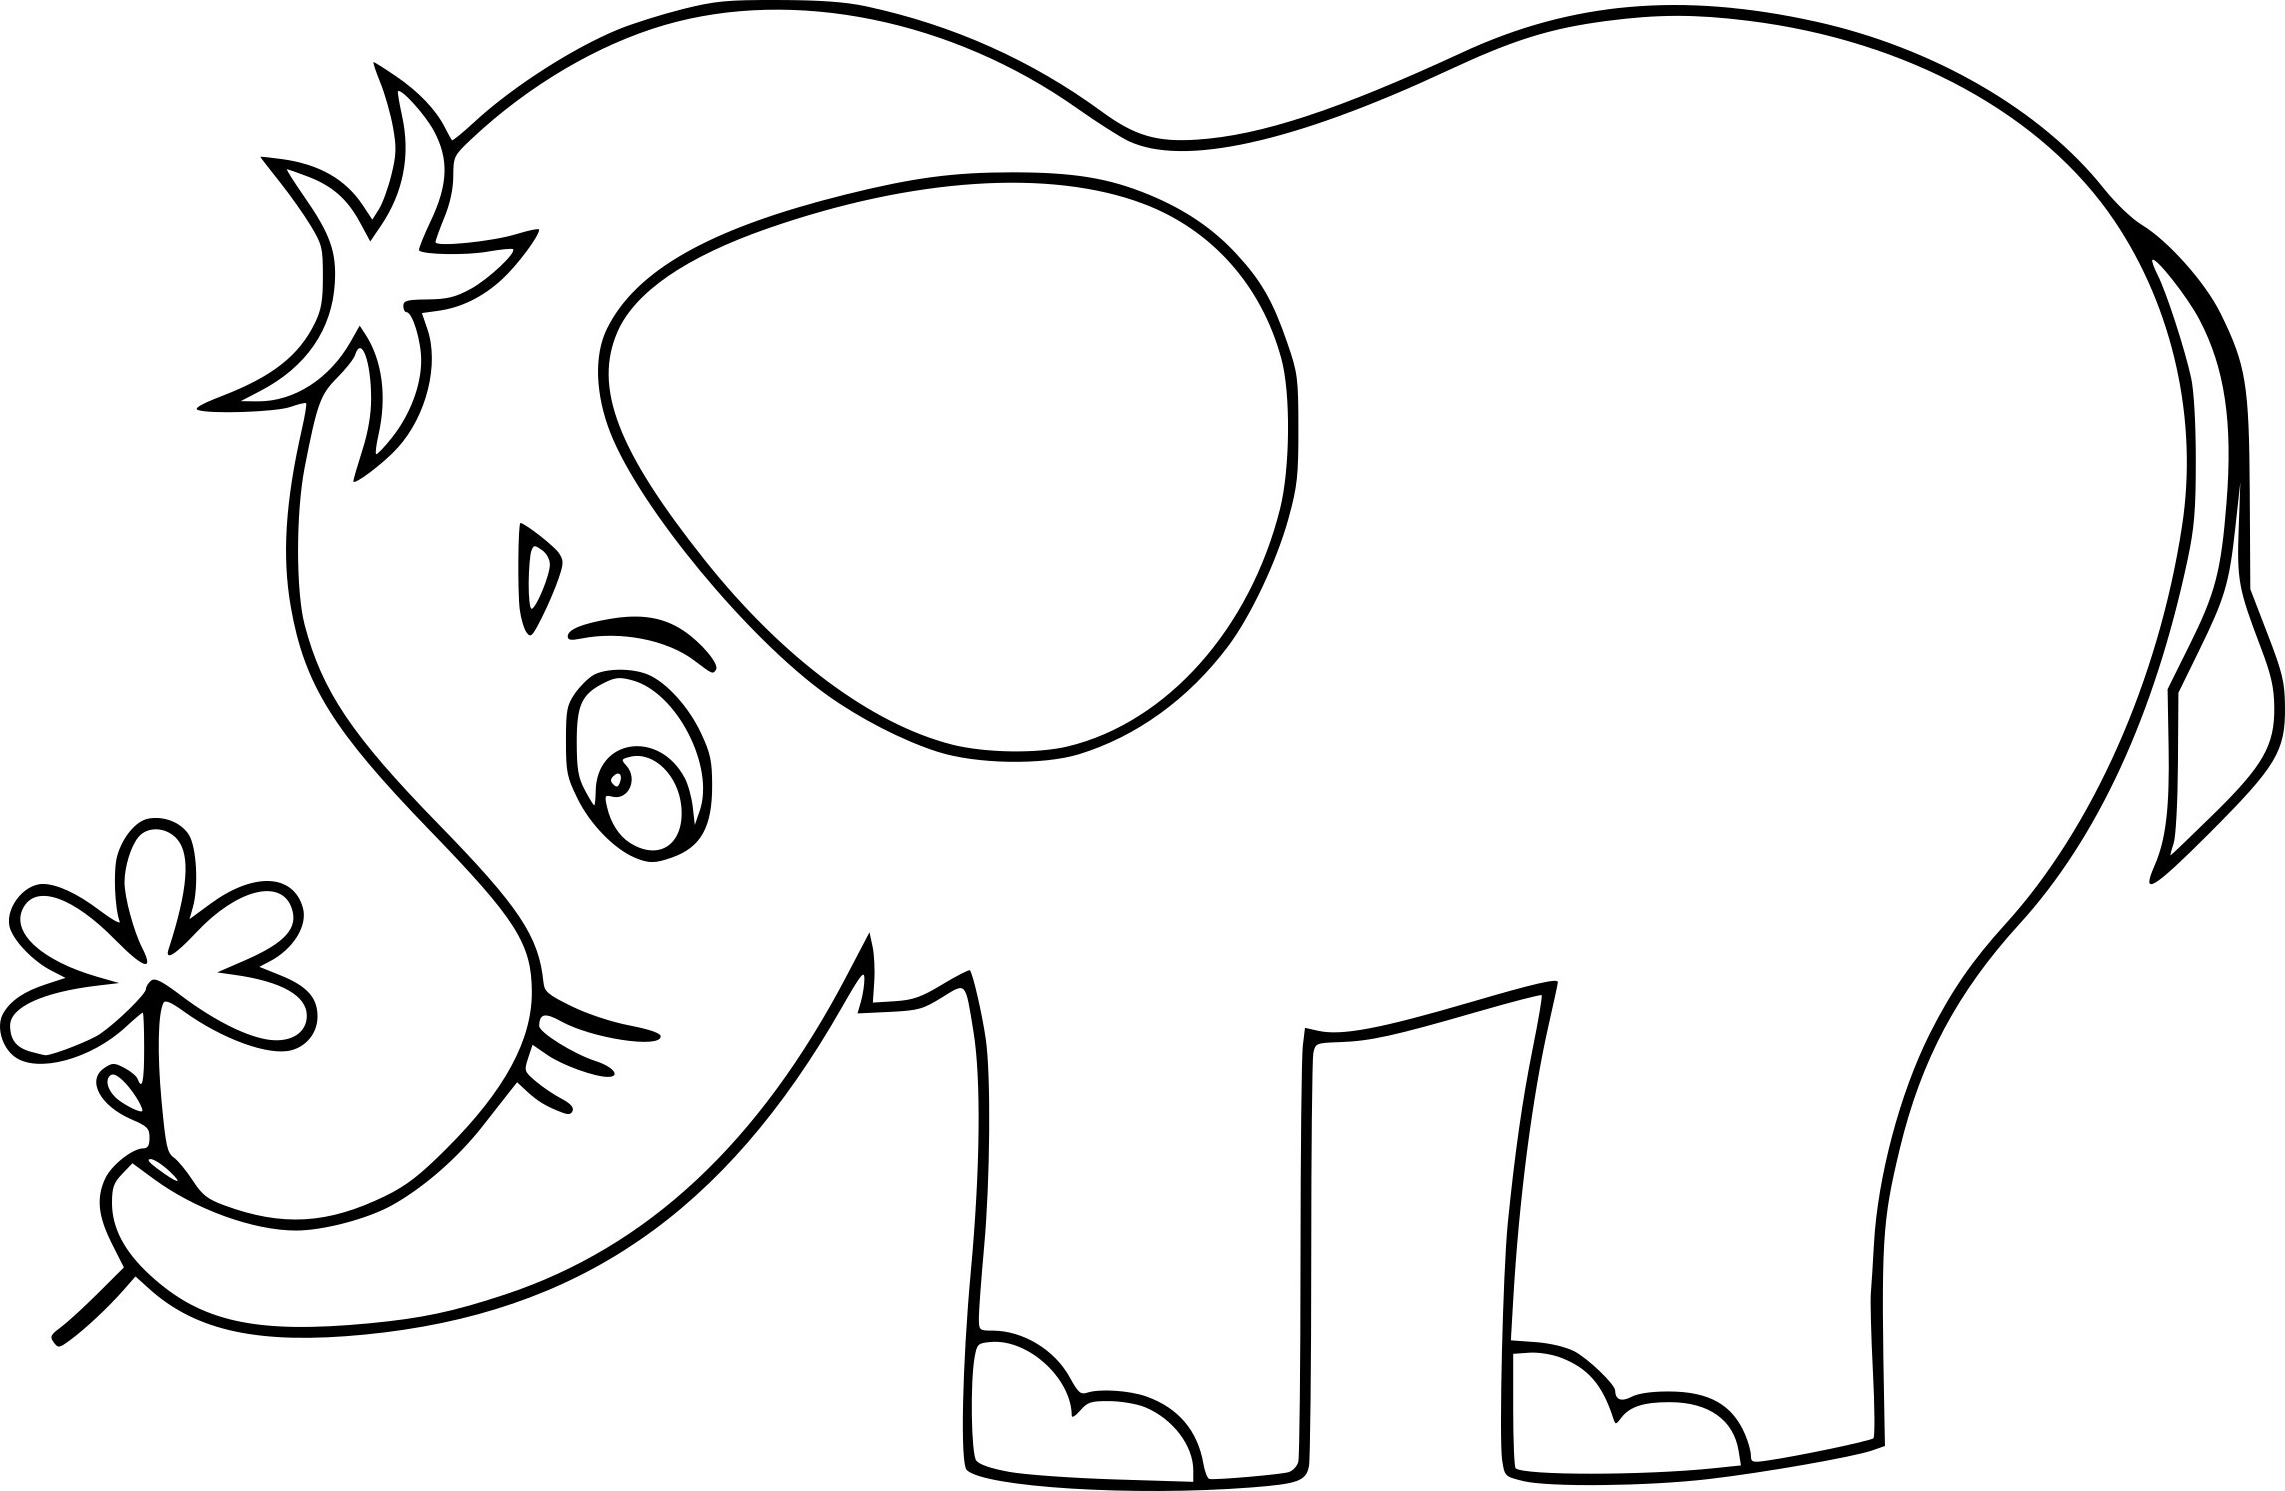 60 coloriage mandala elephant blackstonefranks coloriage fr impressionnant 25 nouveau 25 dessin d039elephant a imprimer